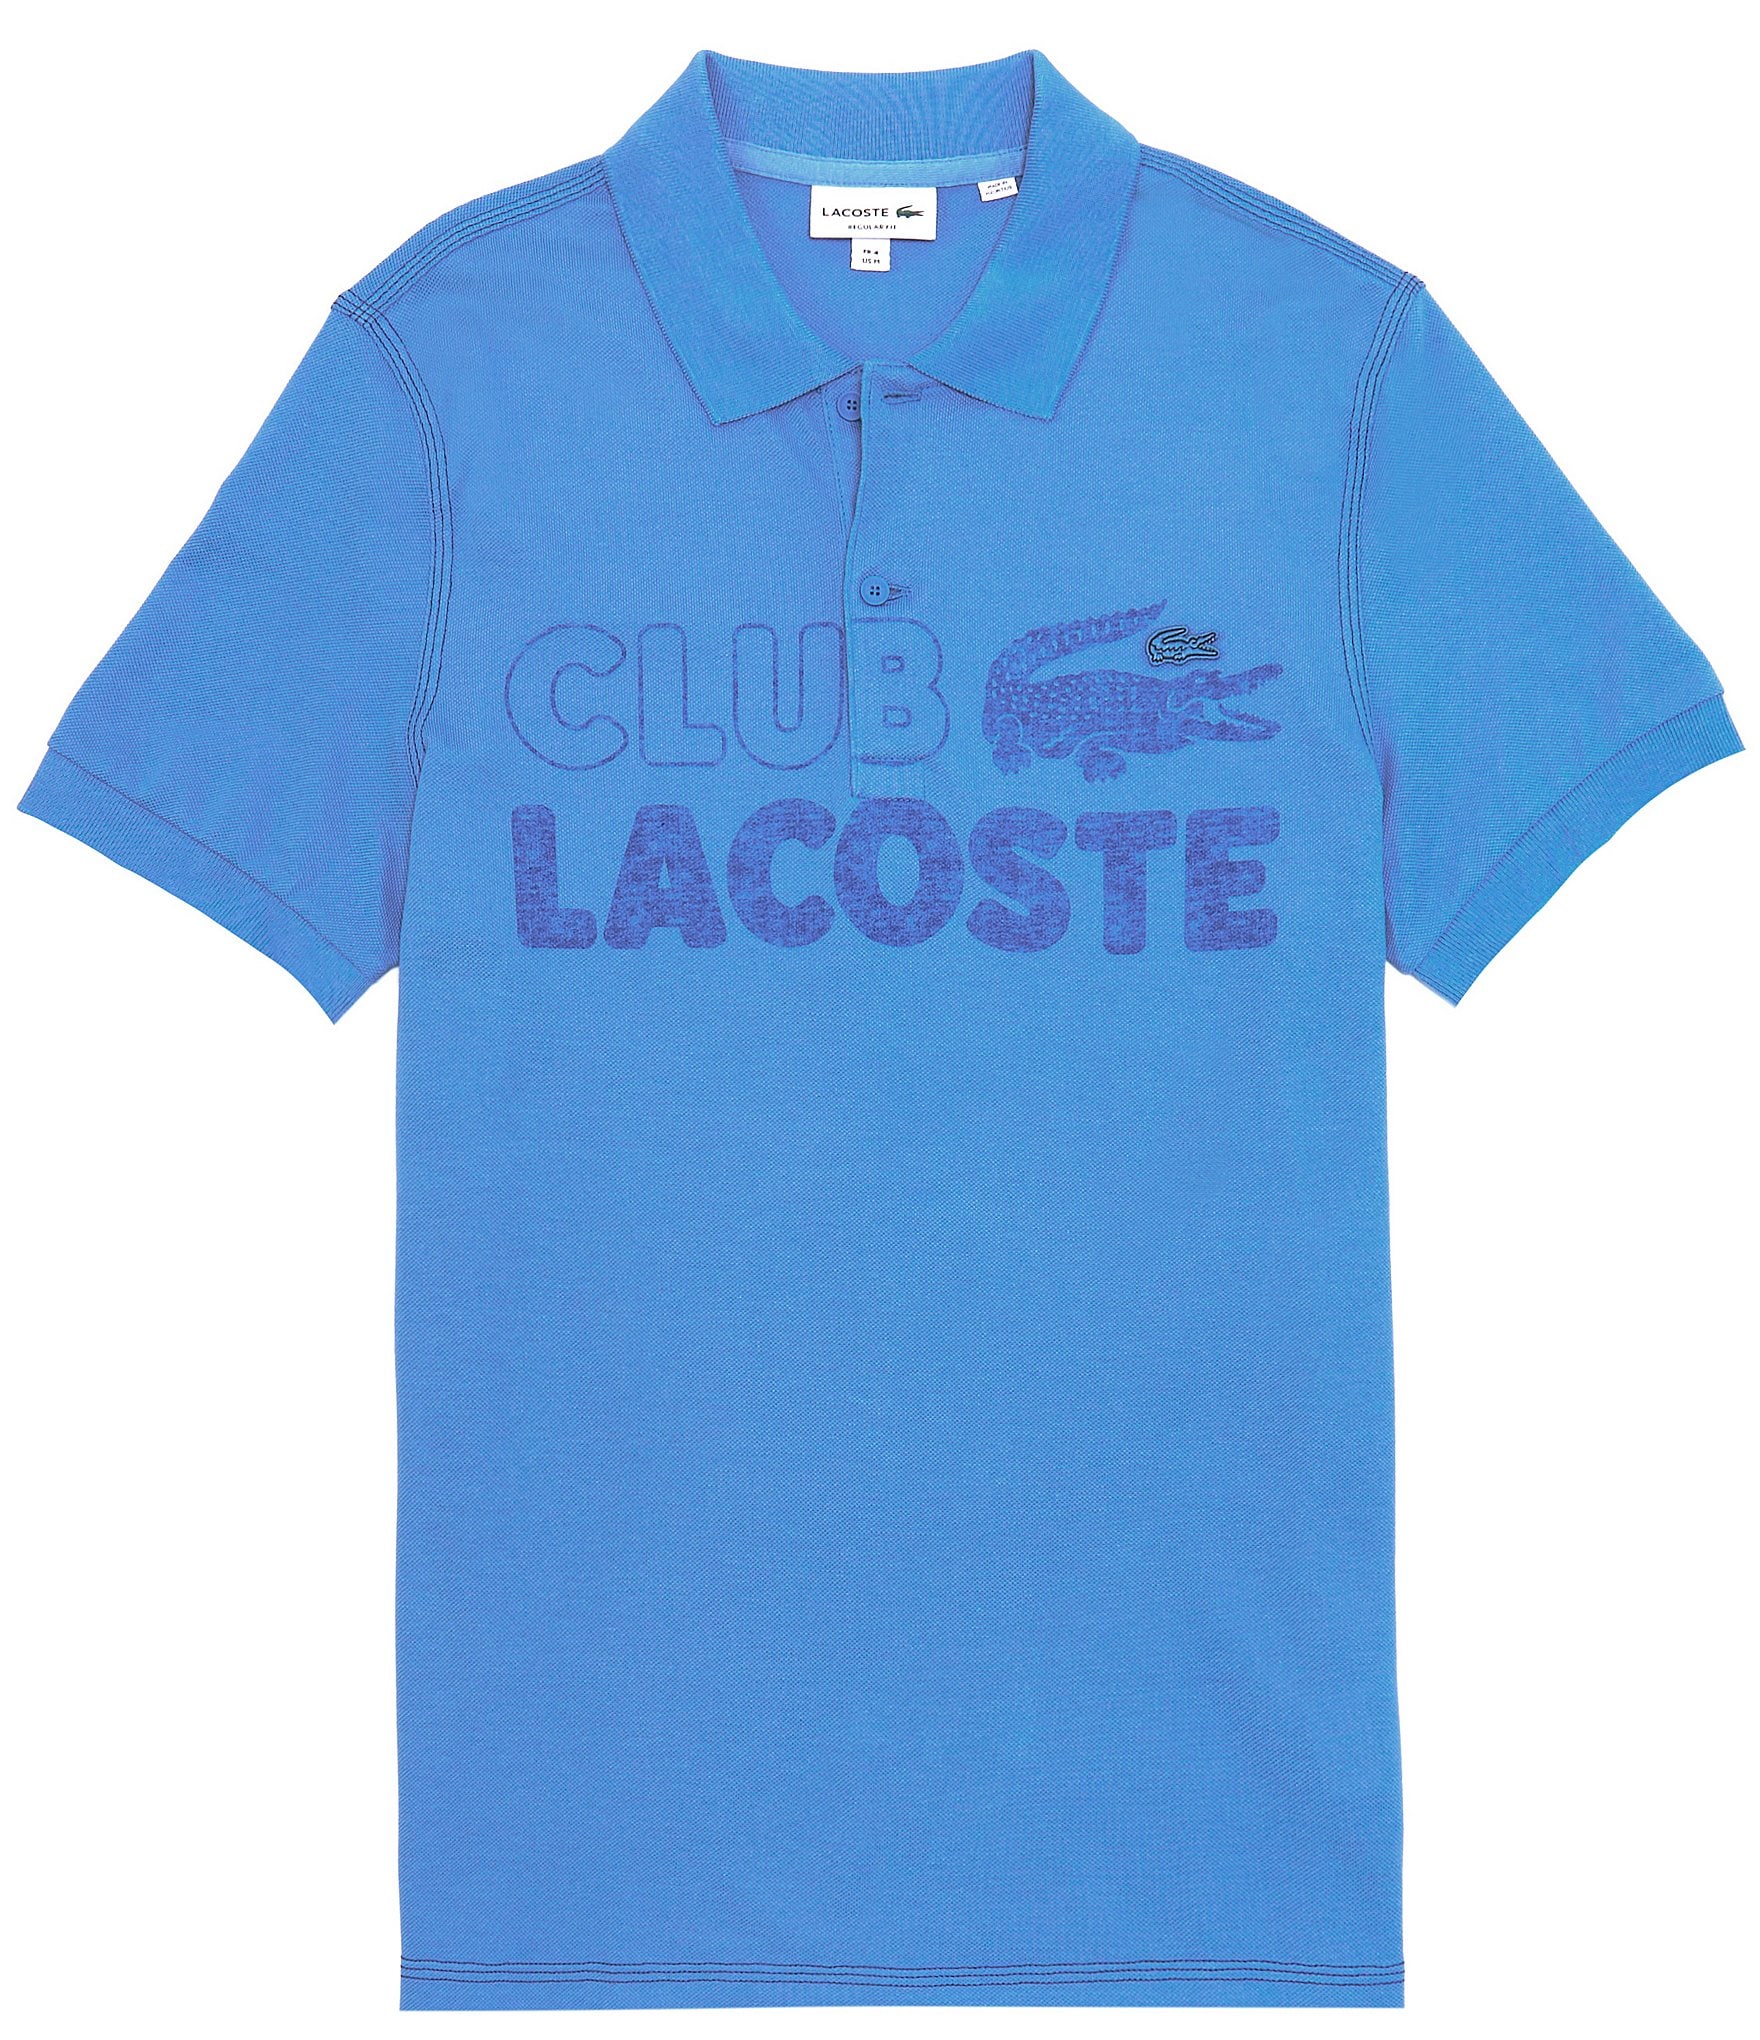 Lacoste Club Lacoste Short Sleeve Polo Shirt | Dillard's